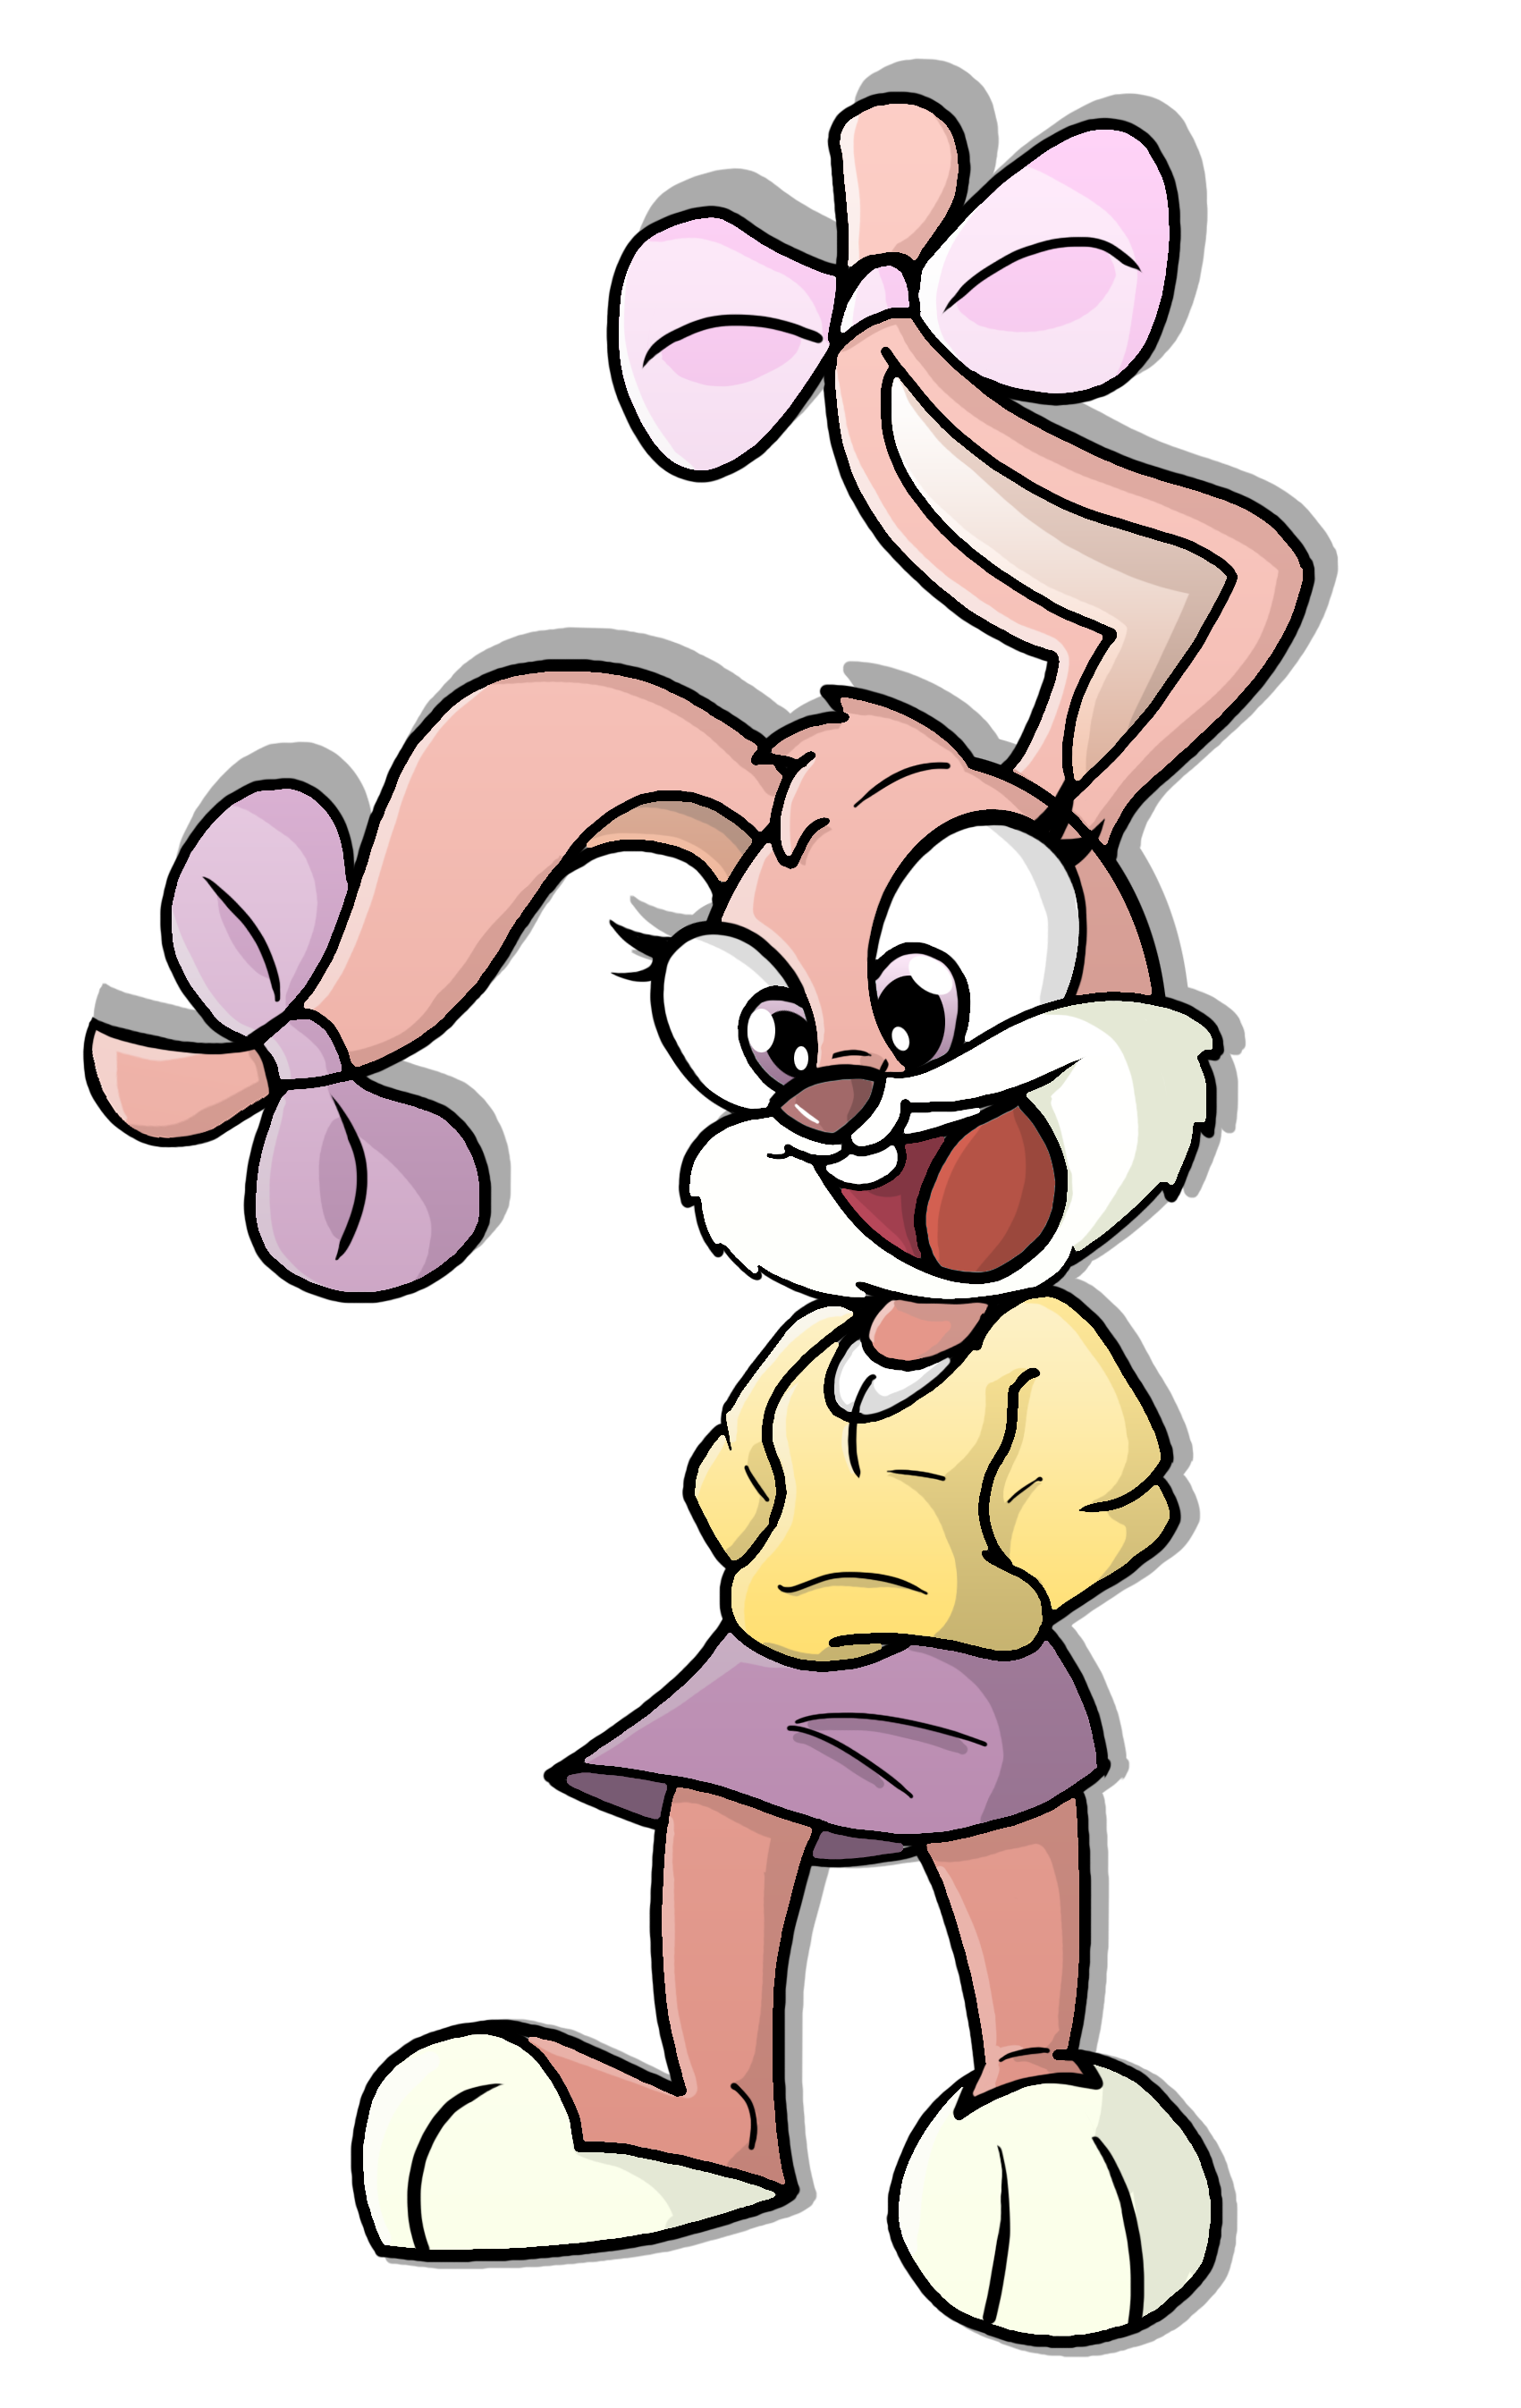 Babs bunny. Бэбс Банни Babs Bunny. Мультипликационный кролик. Мультипликационный персонаж Банни. Кролик персонаж.